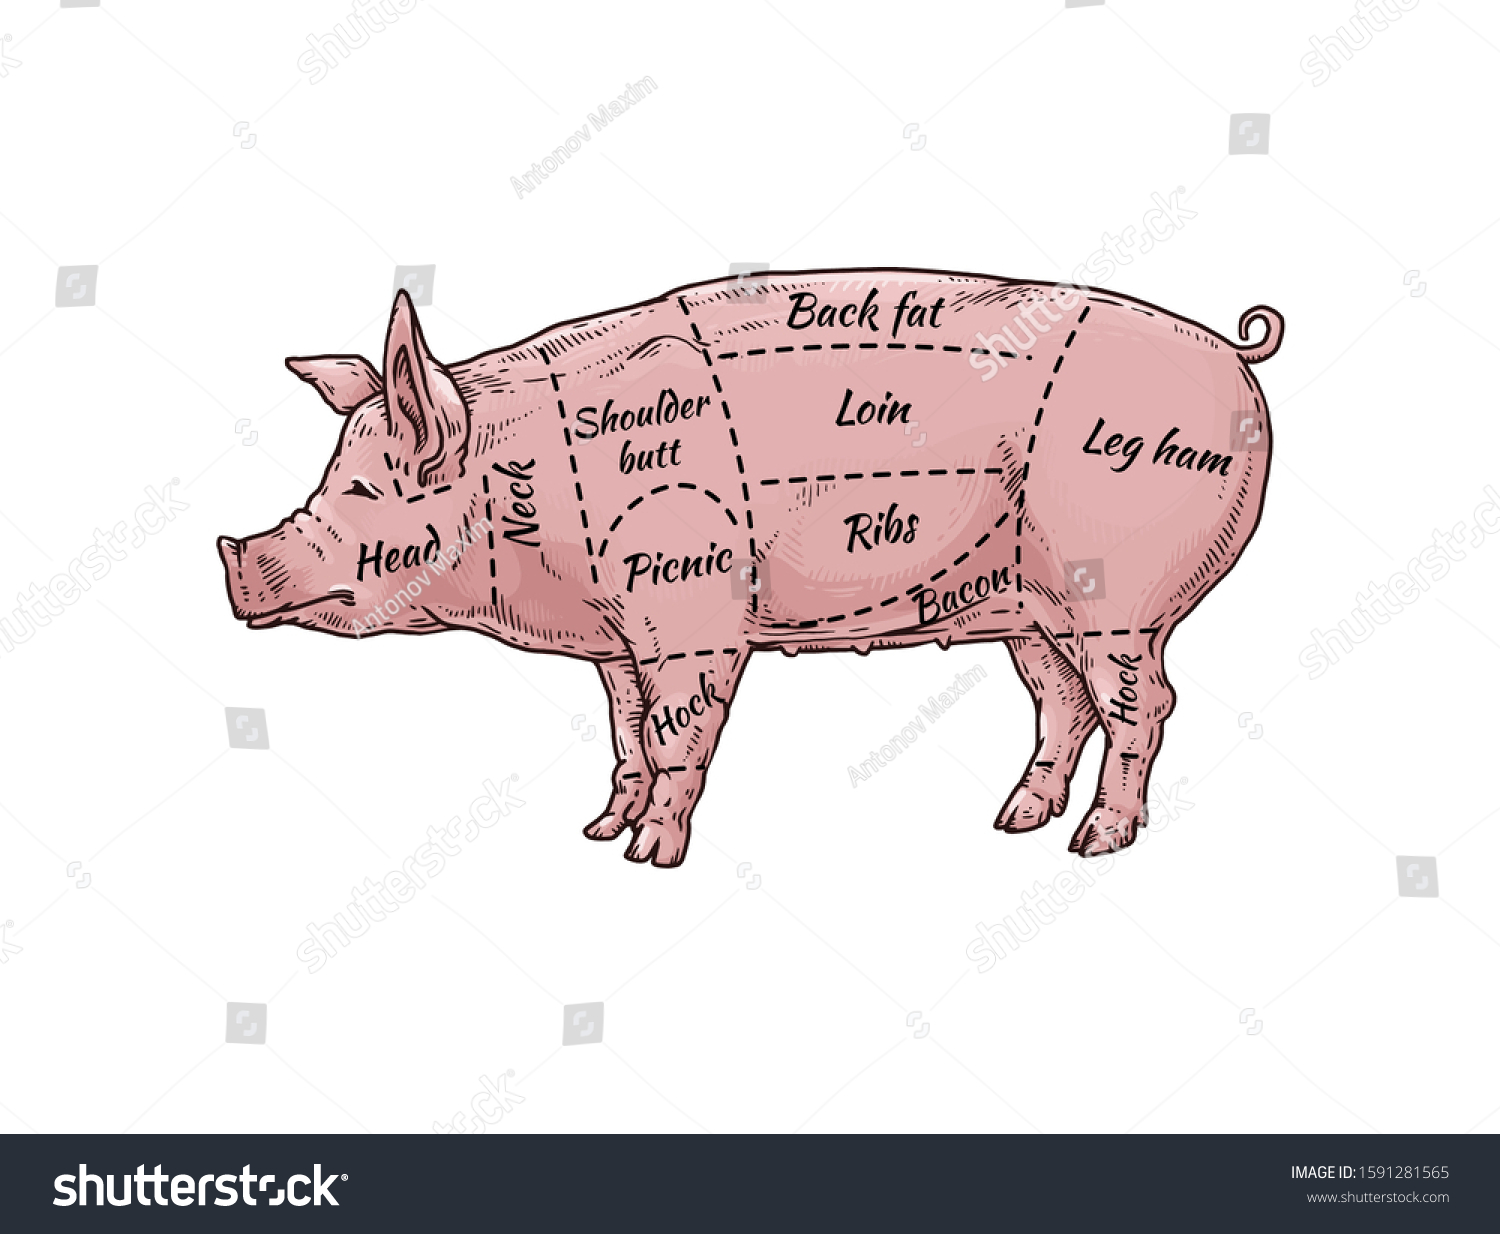 Recipe of Pork Loin Body Part